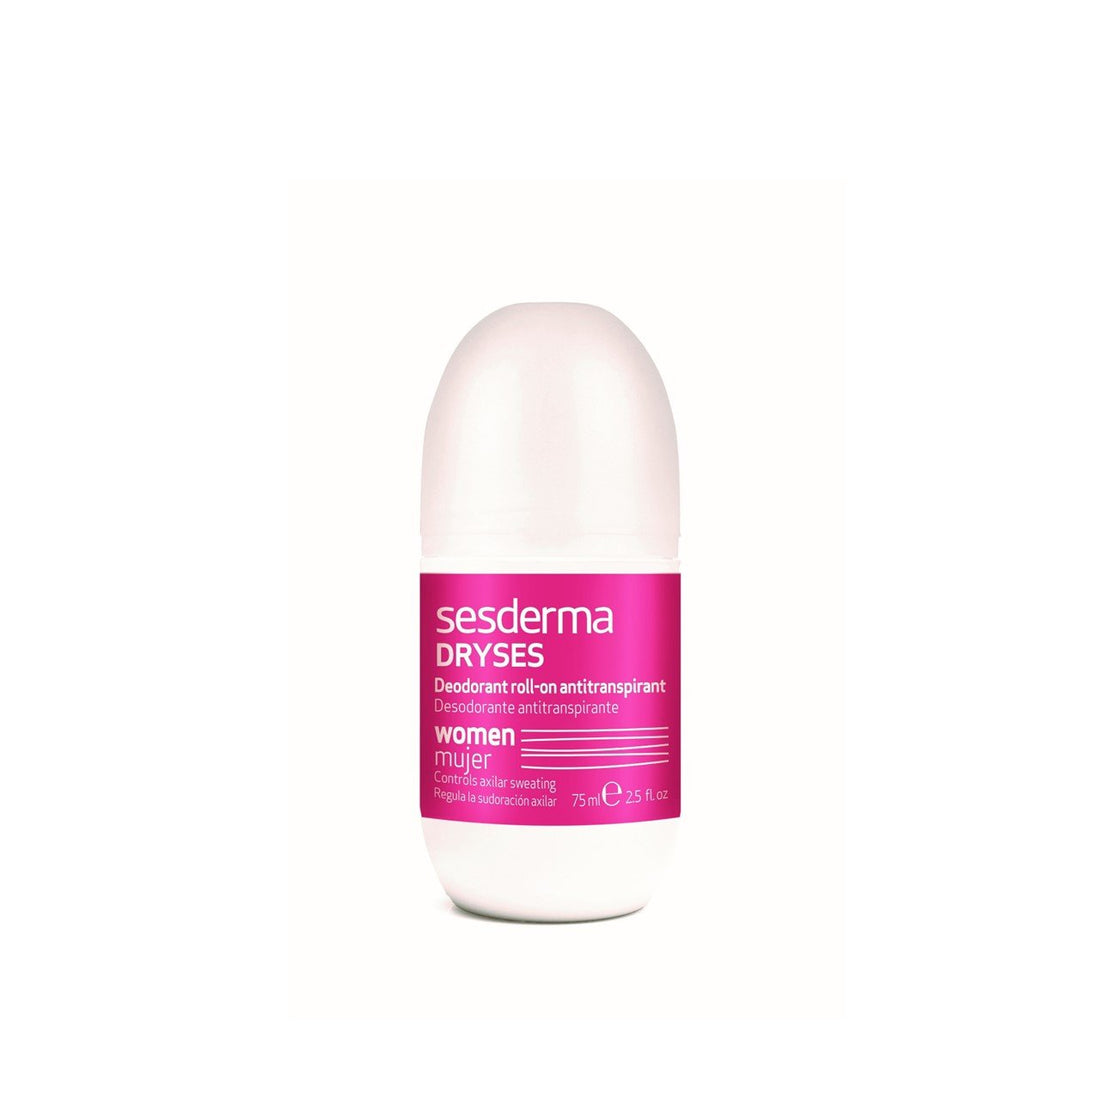 Sesderma Dryses Desodorante Feminino Roll-On Antitranspirante 75ml (2.54fl oz)